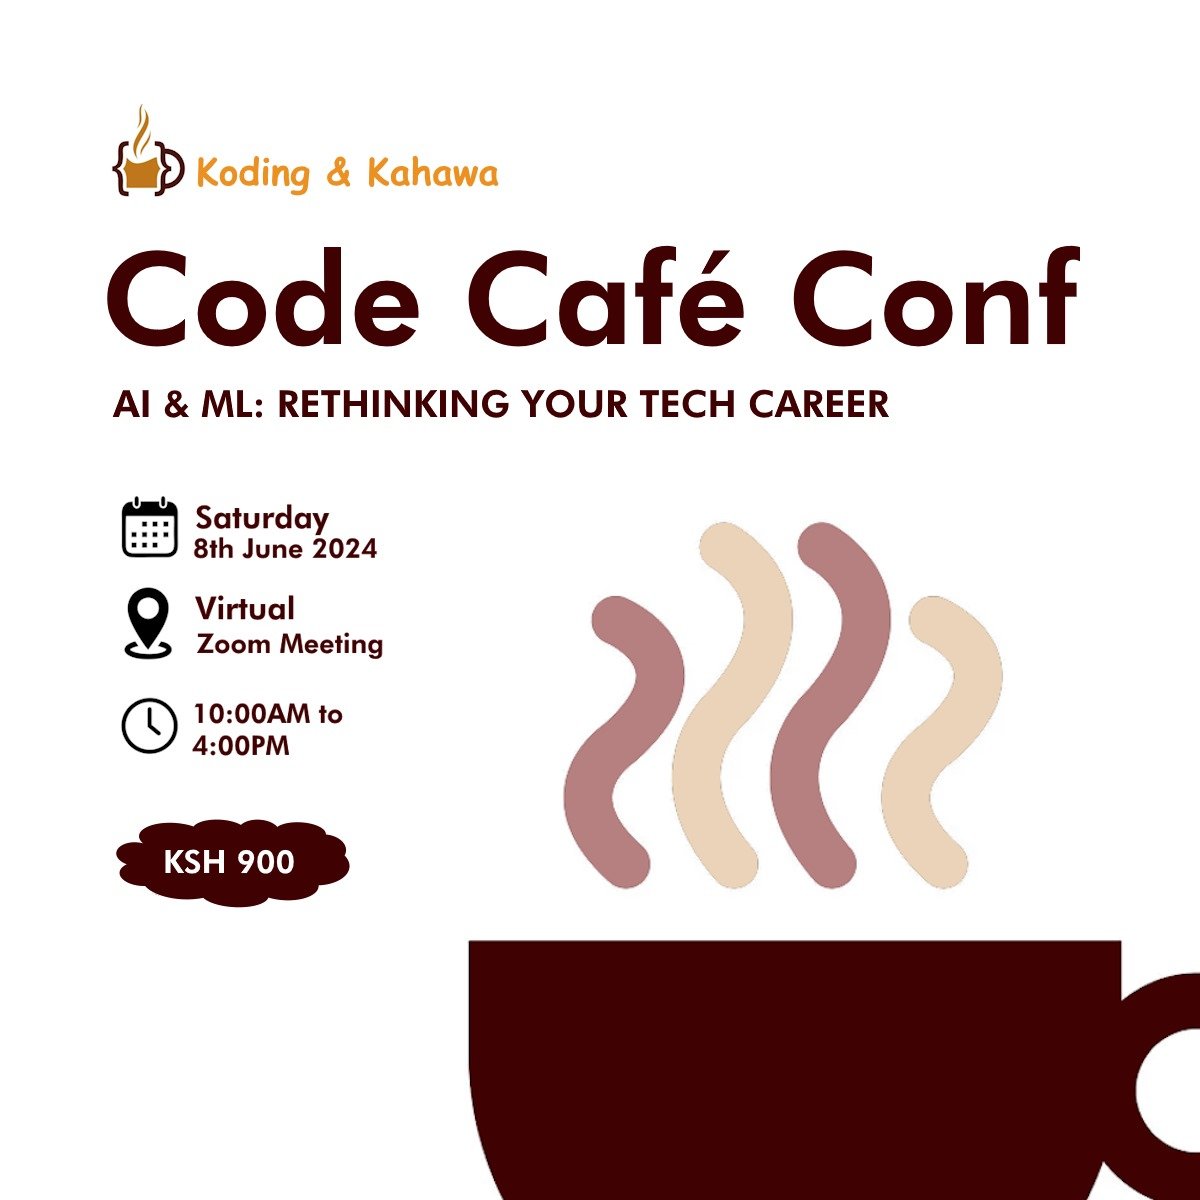 Koding & Kahawa Code Café Conf 2024